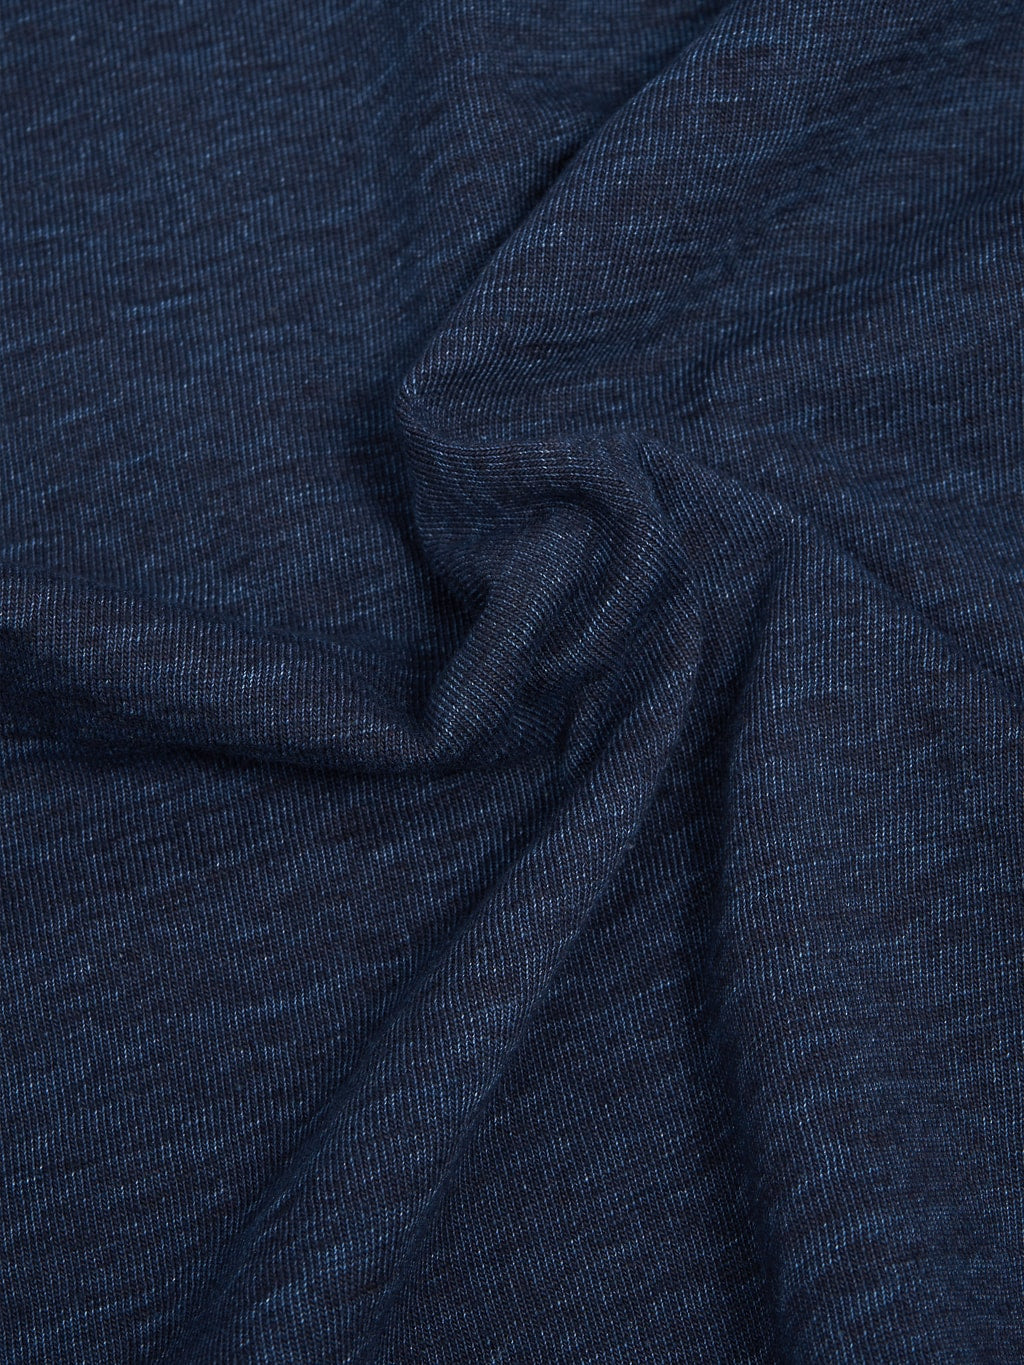 Pure blue japan indigo dyed crewneck tshirt cotton fabric